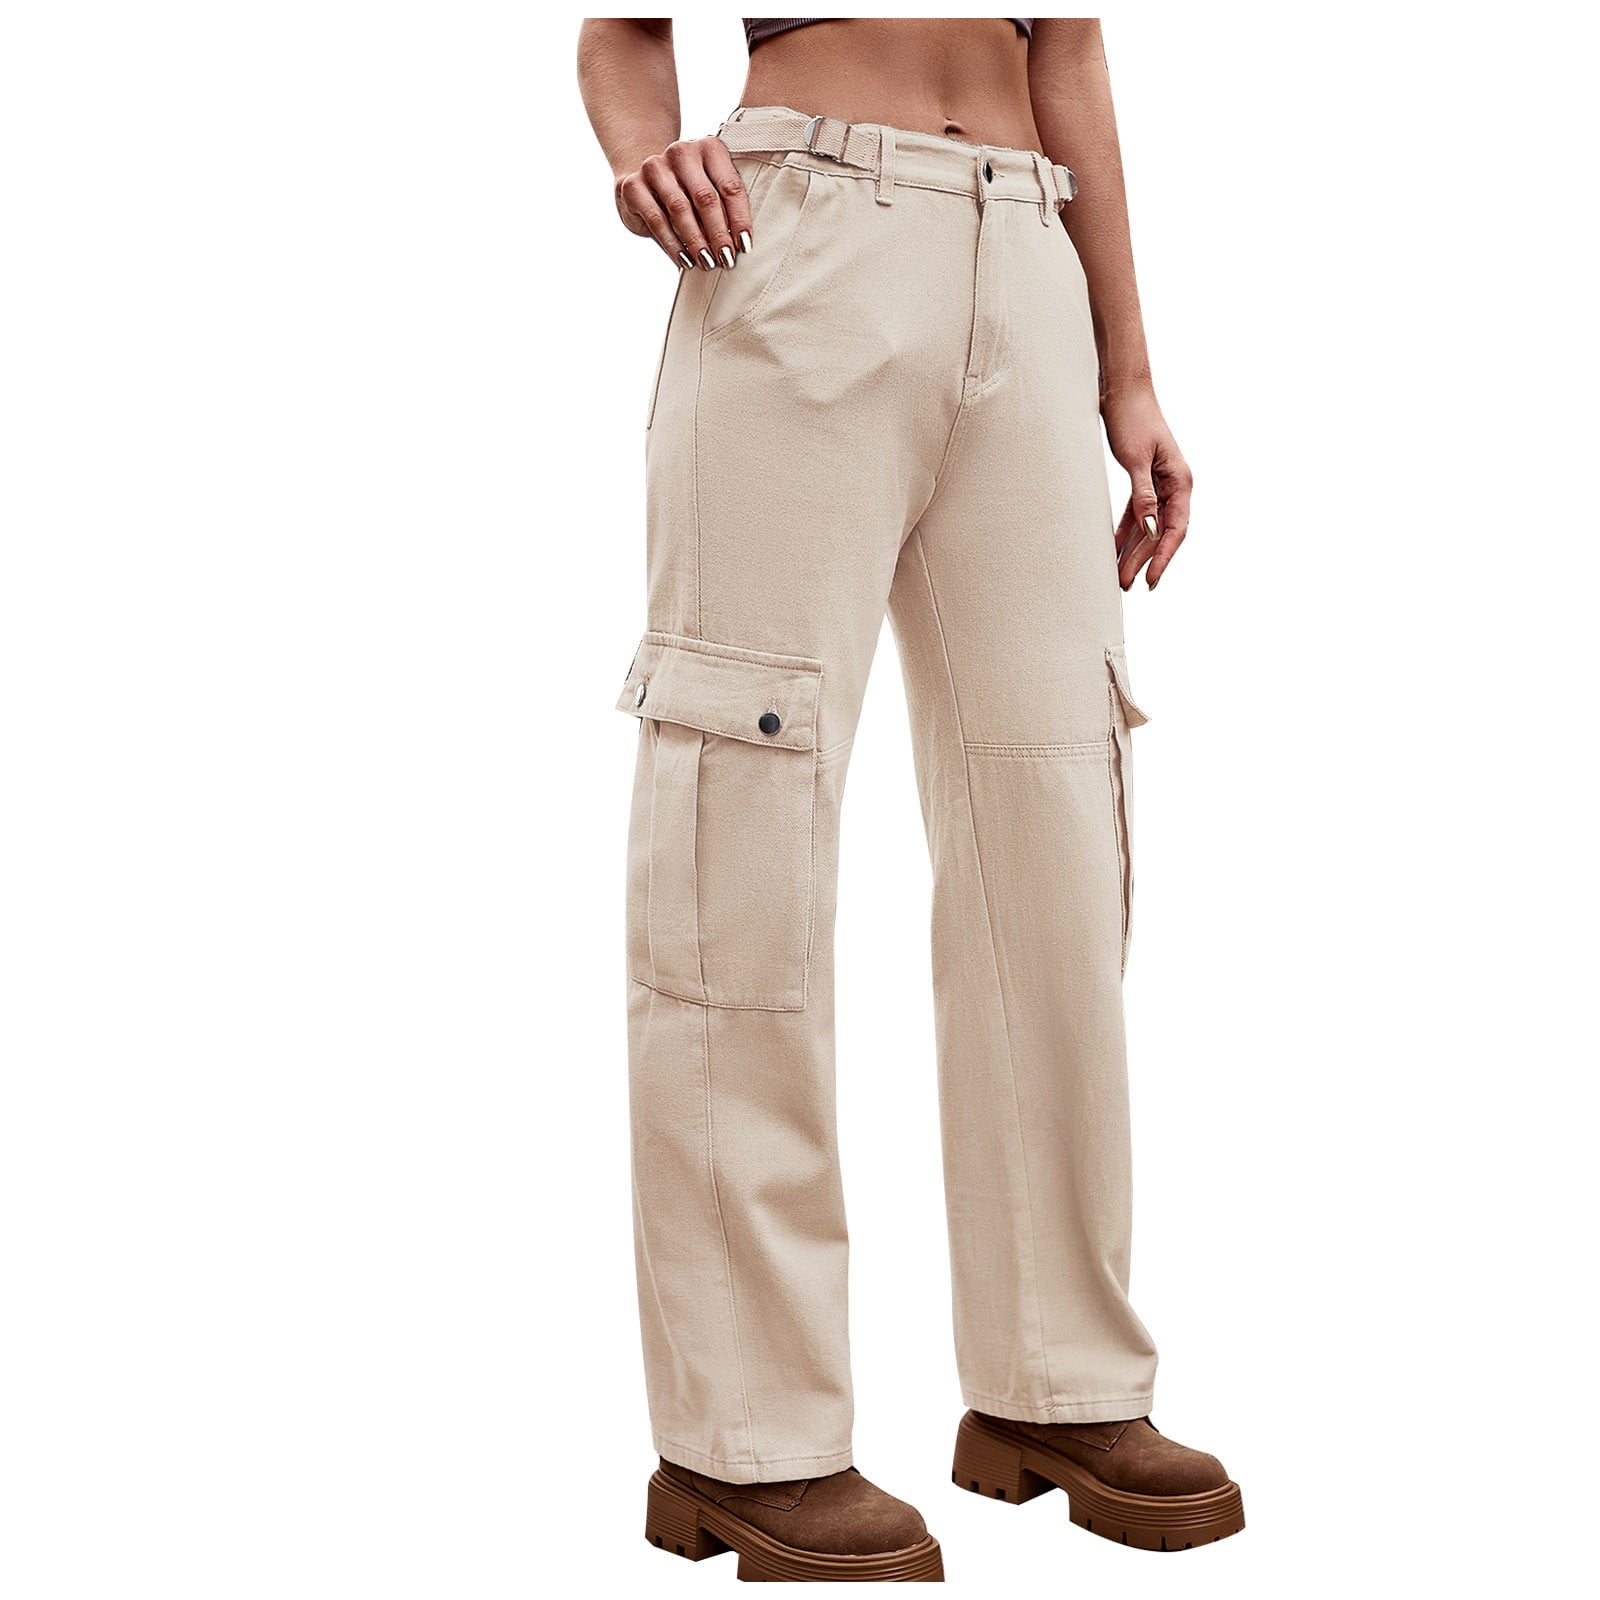 Loose Khaki Cargo Pants  Khaki cargo pants, Cargo pants, Trousers women